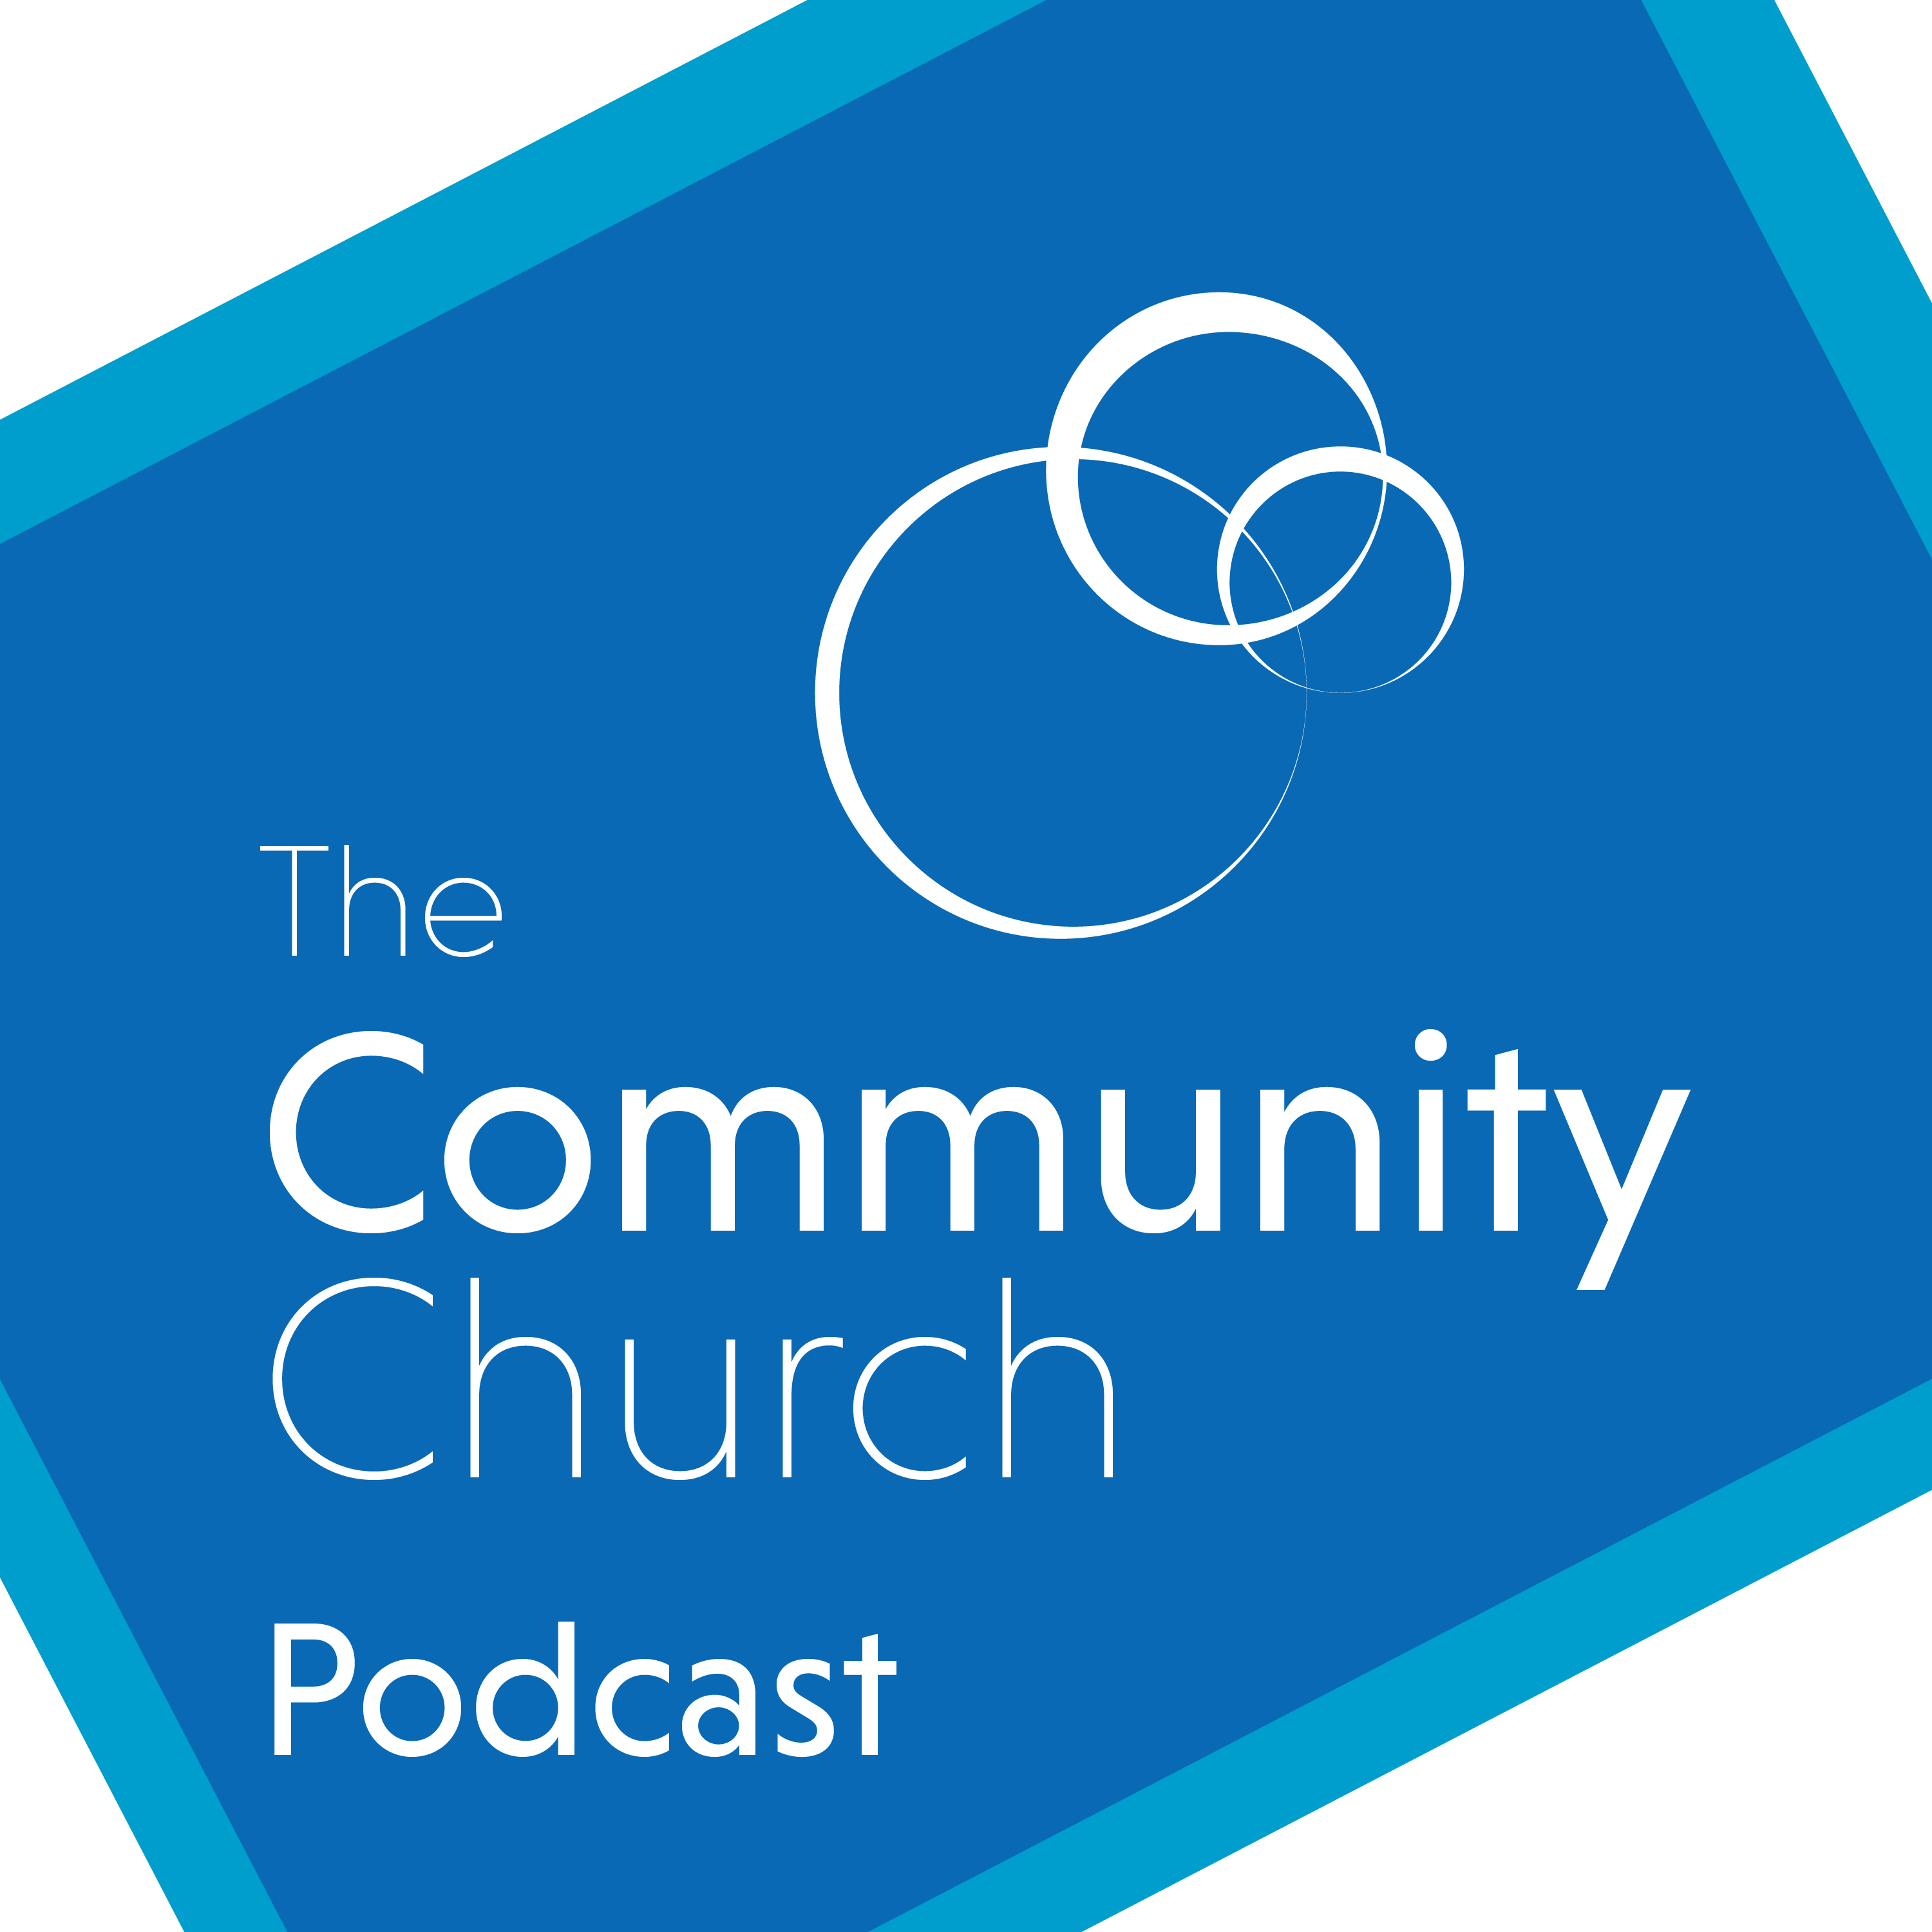 The Community Church Podcast